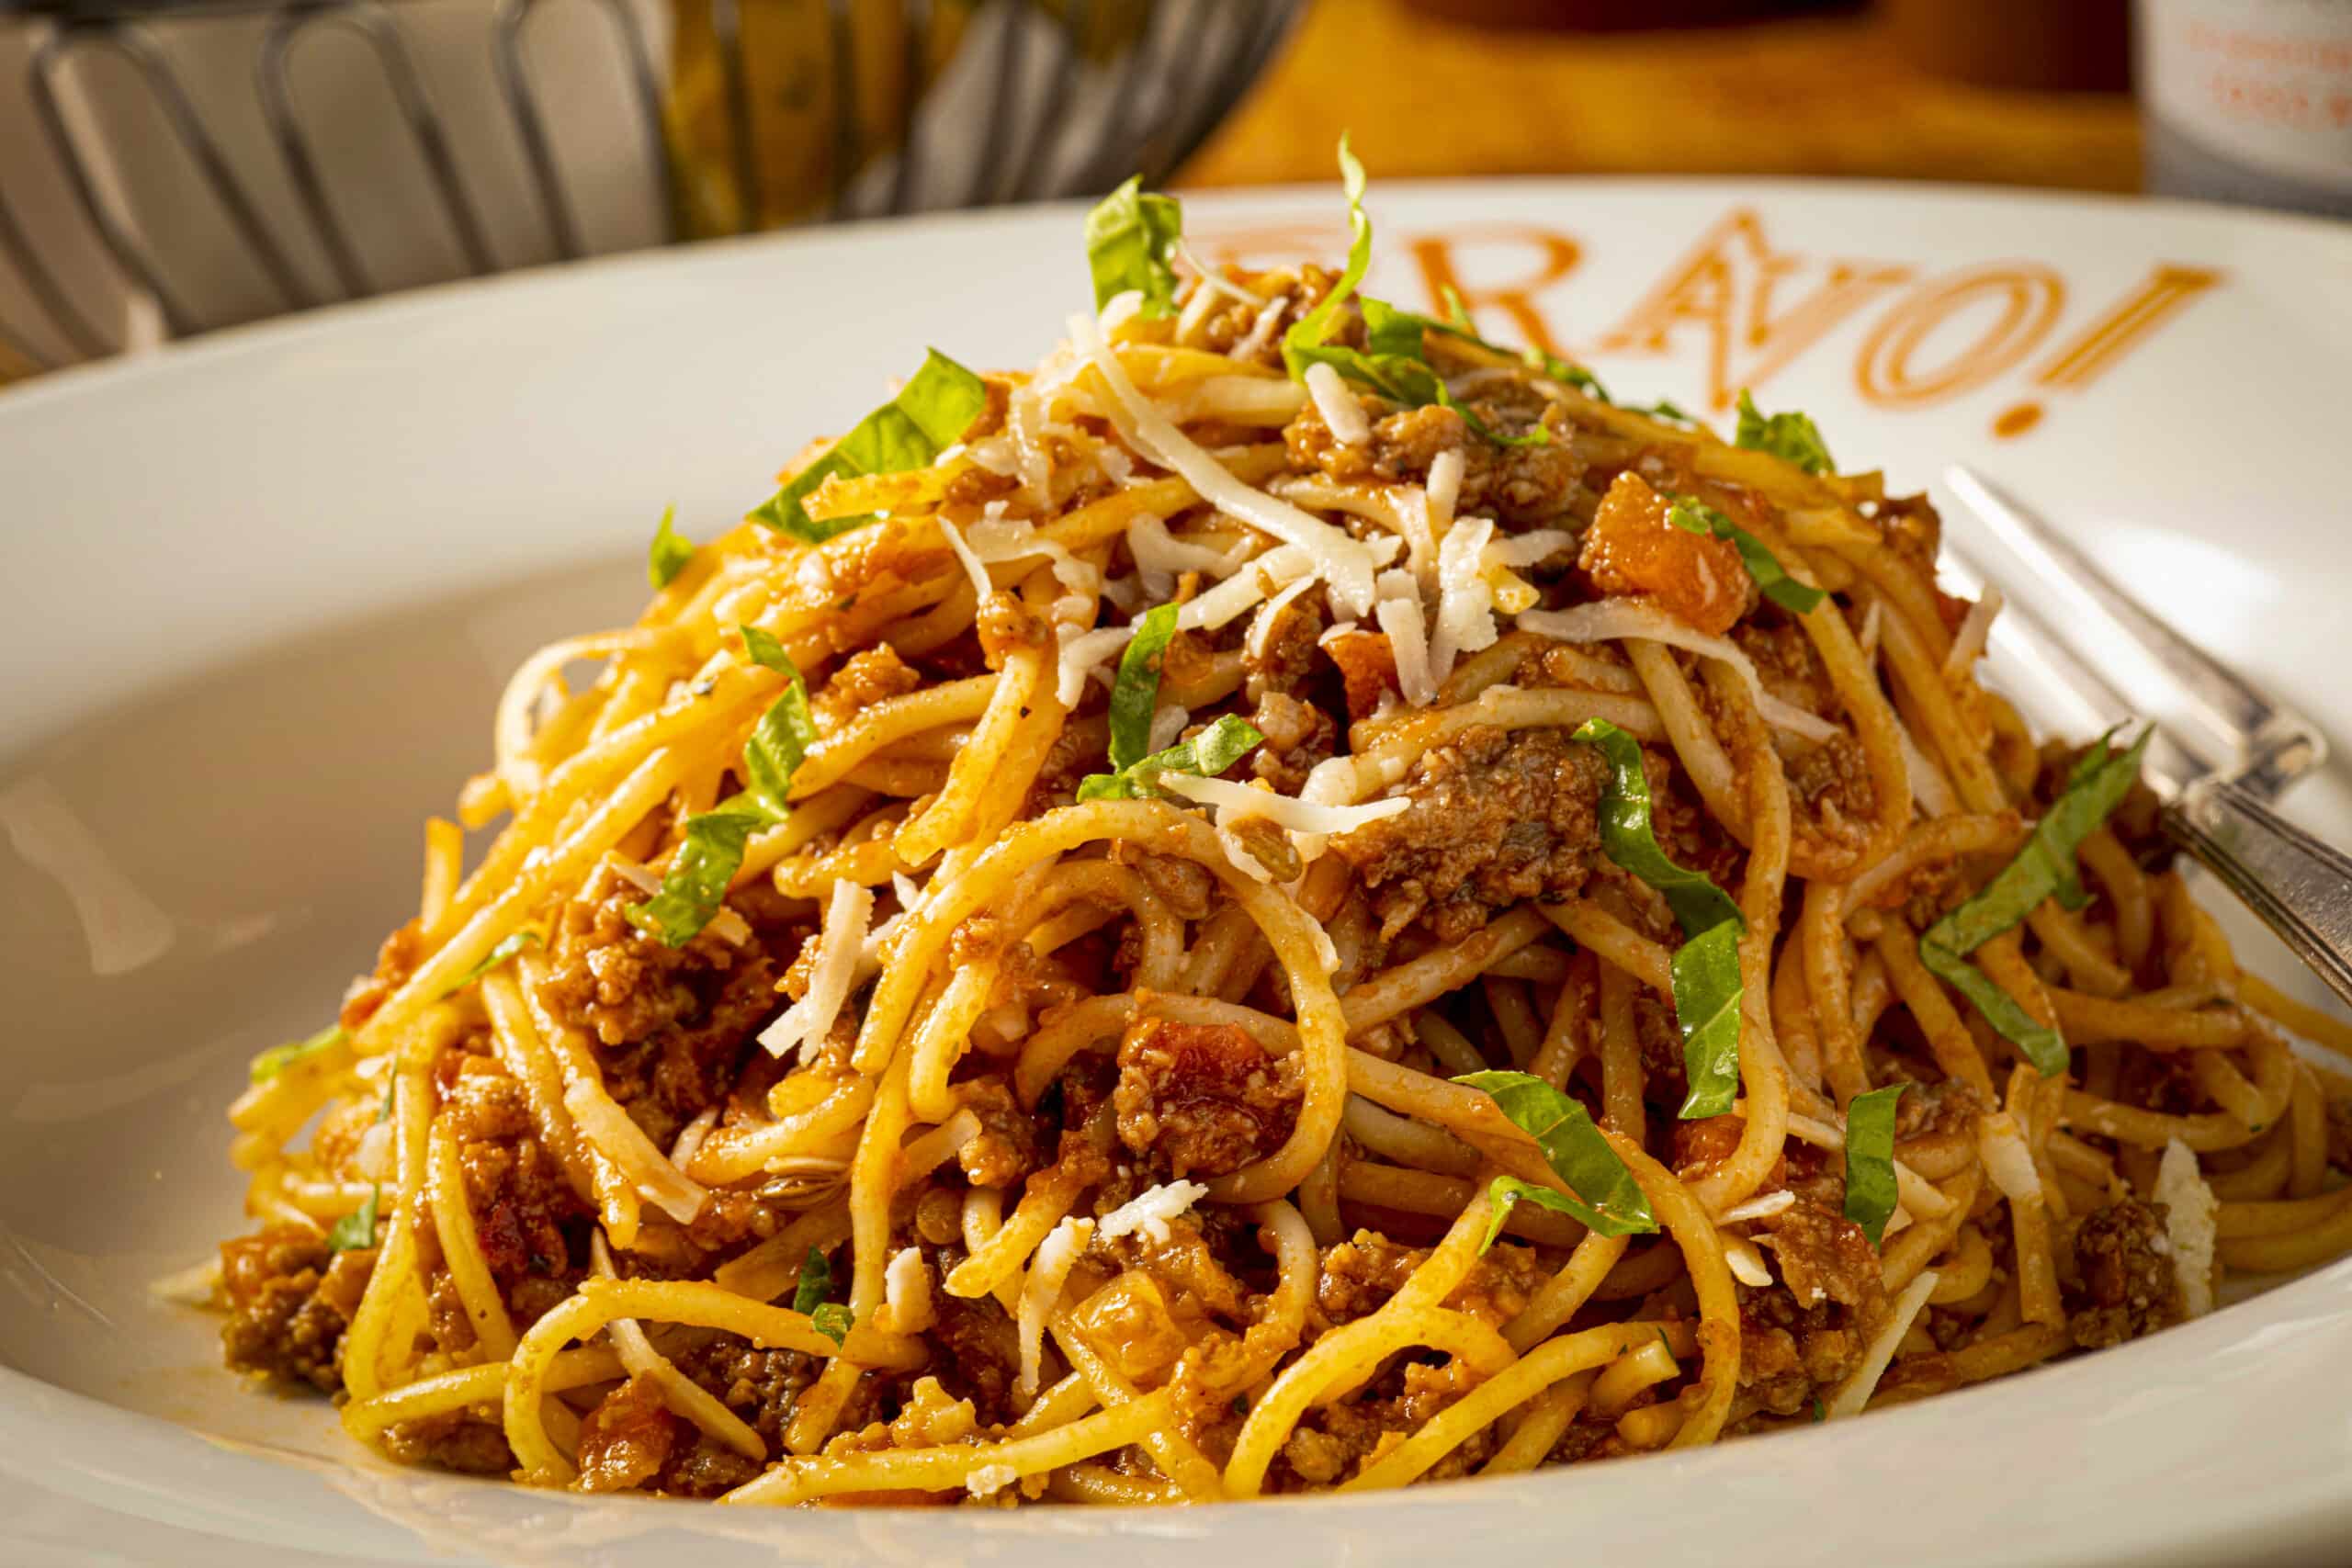 A photo of Bravo's Spaghetti Bolognese